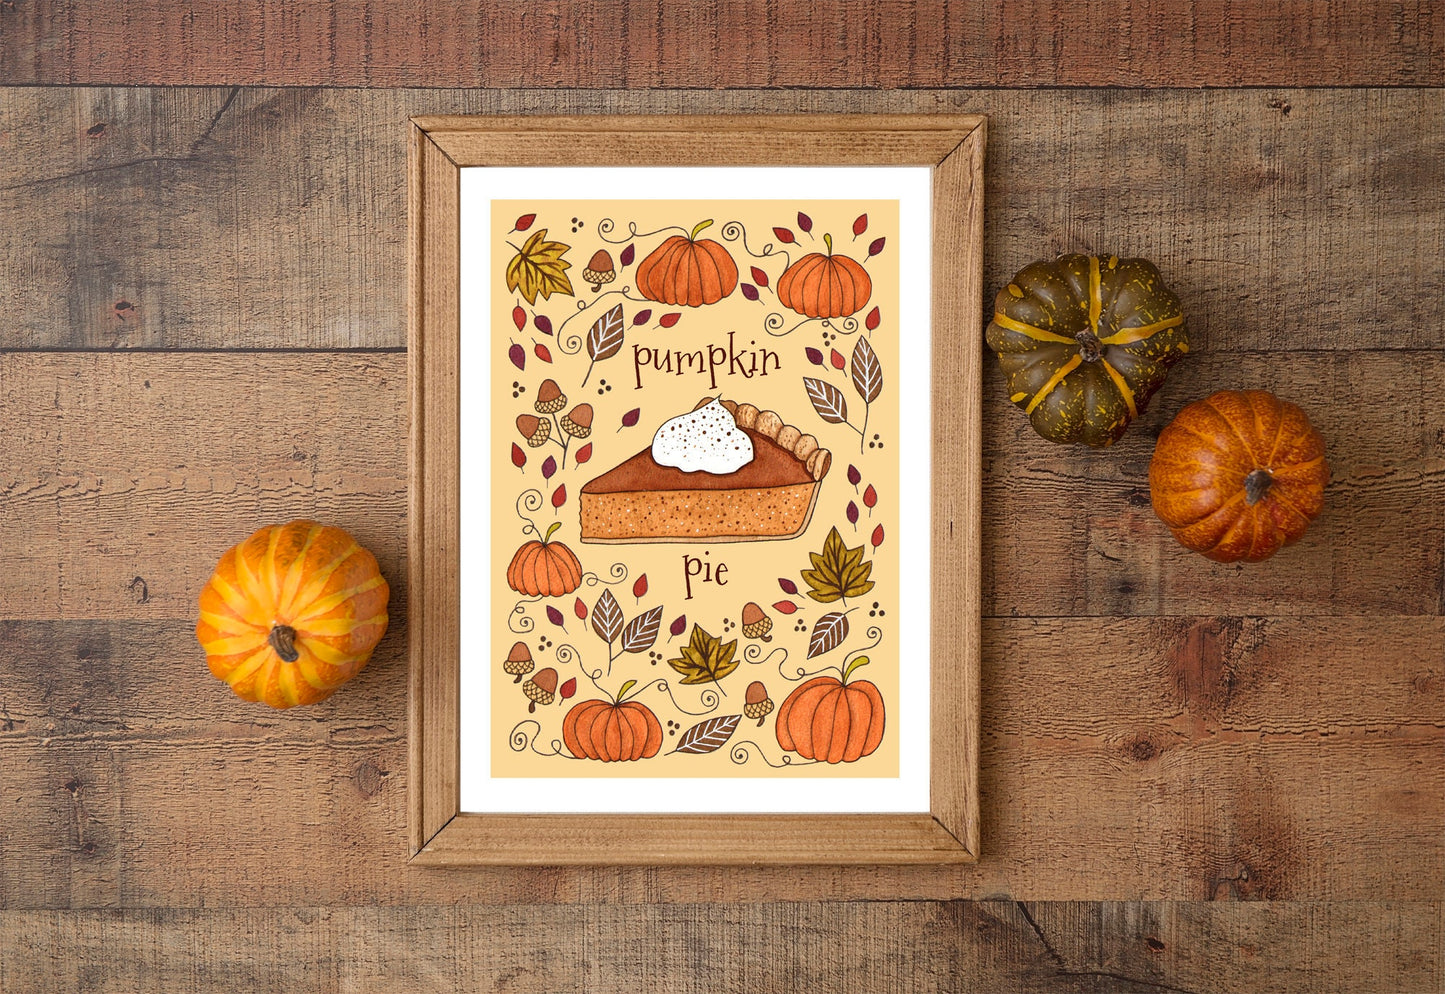 Pumpkin Pie Print - Orange Autumn Fall A5 - A4 - A3 Illustration Art Print - Rustic Thanksgiving Decor - Halloween Food Kitchen Baking Print